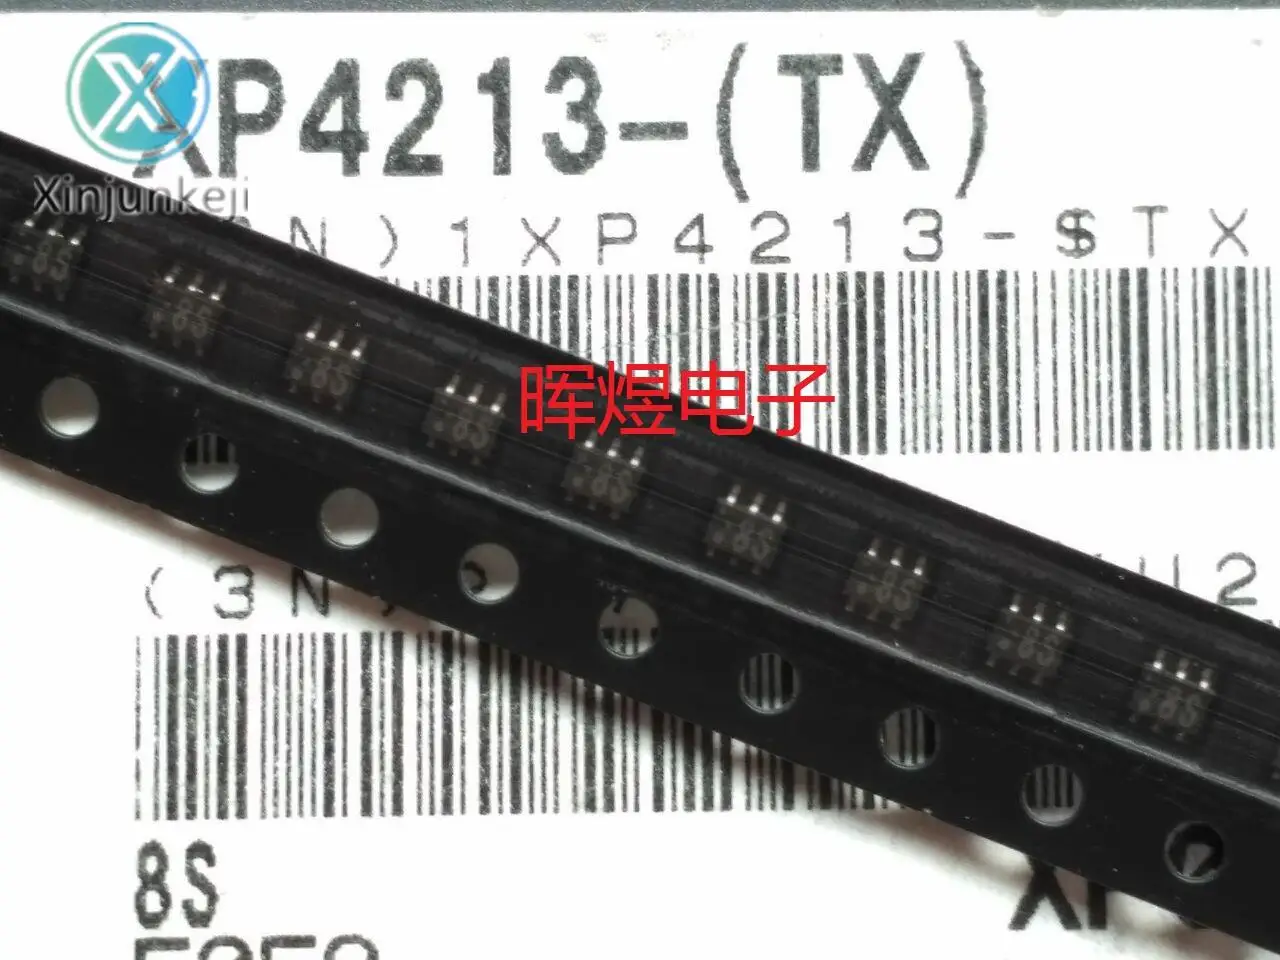 

30pcs orginal new XP4213 SOT-363 composite with damping screen: 8S